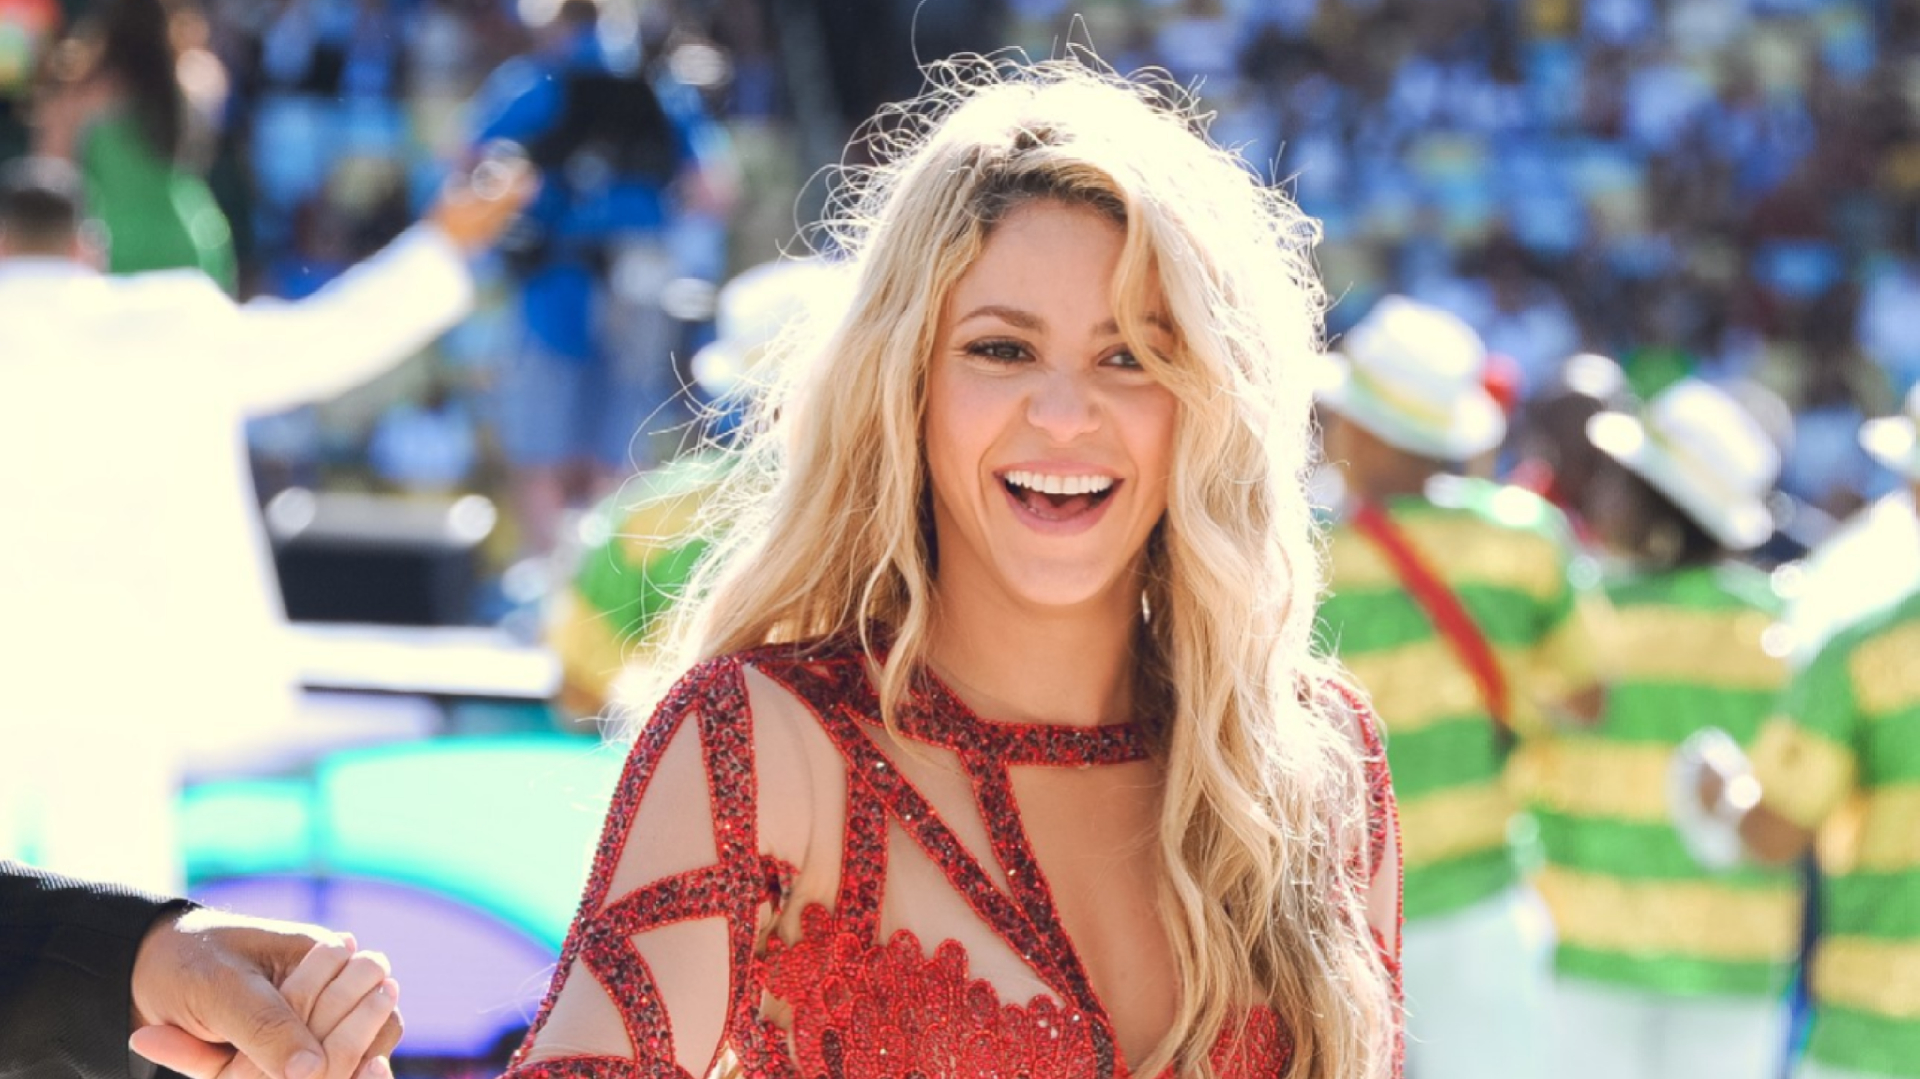 Mídia confirma Shakira na Copa do Qatar – Pronunciamento oficial segue pendente